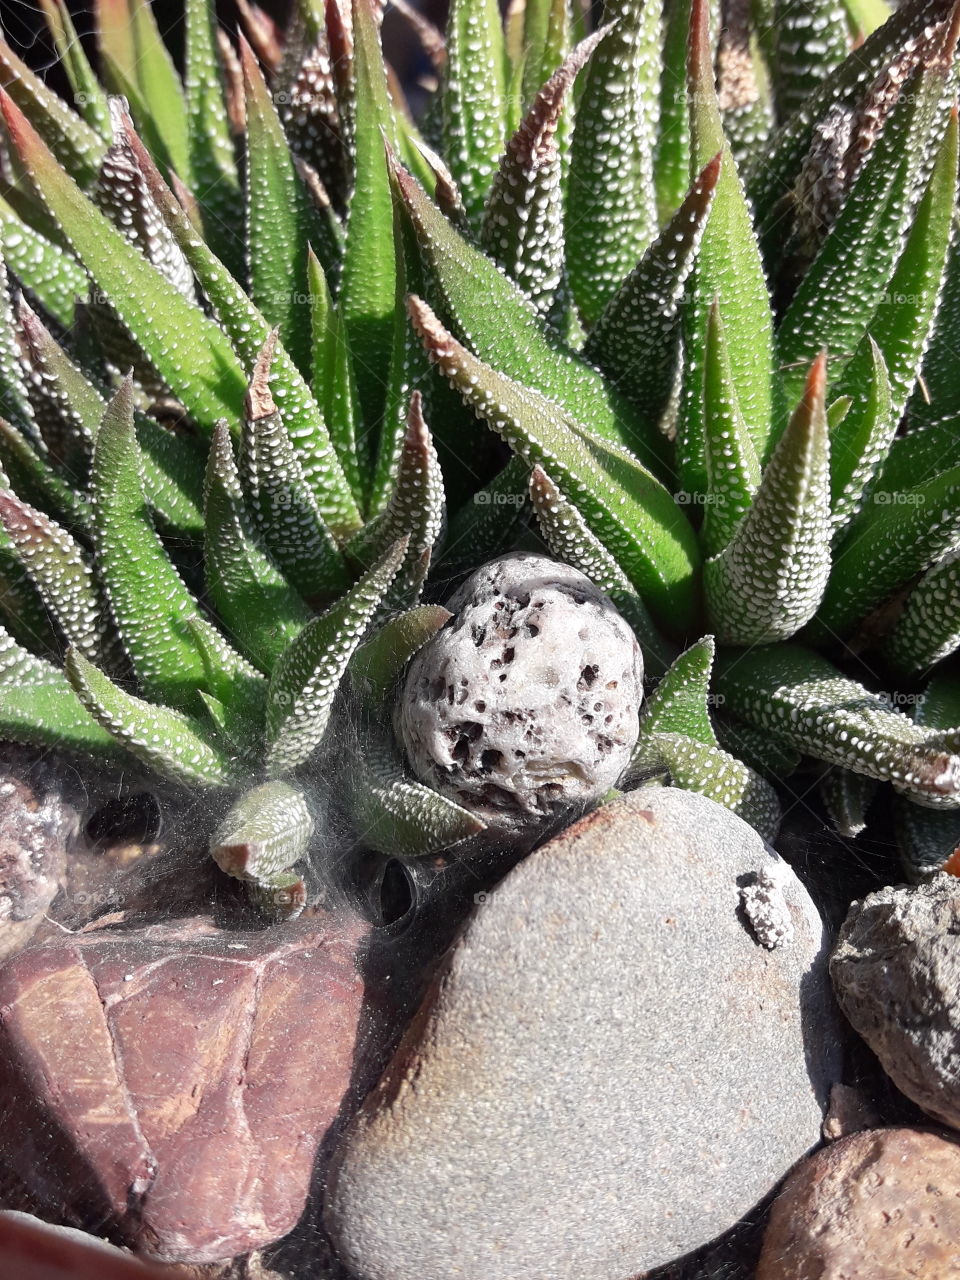 tree cactus with rocks